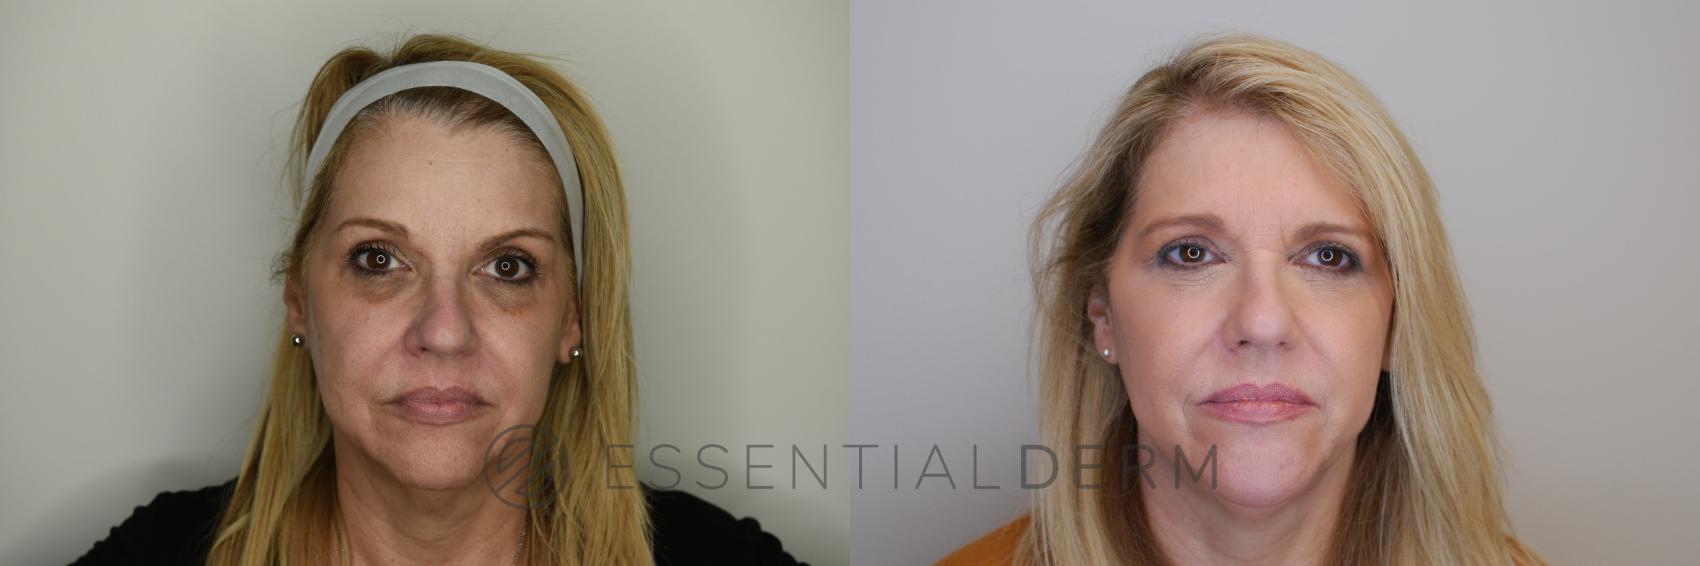 Dermal Fillers Case 22 Before & After Front | Natick, MA | Essential Dermatology